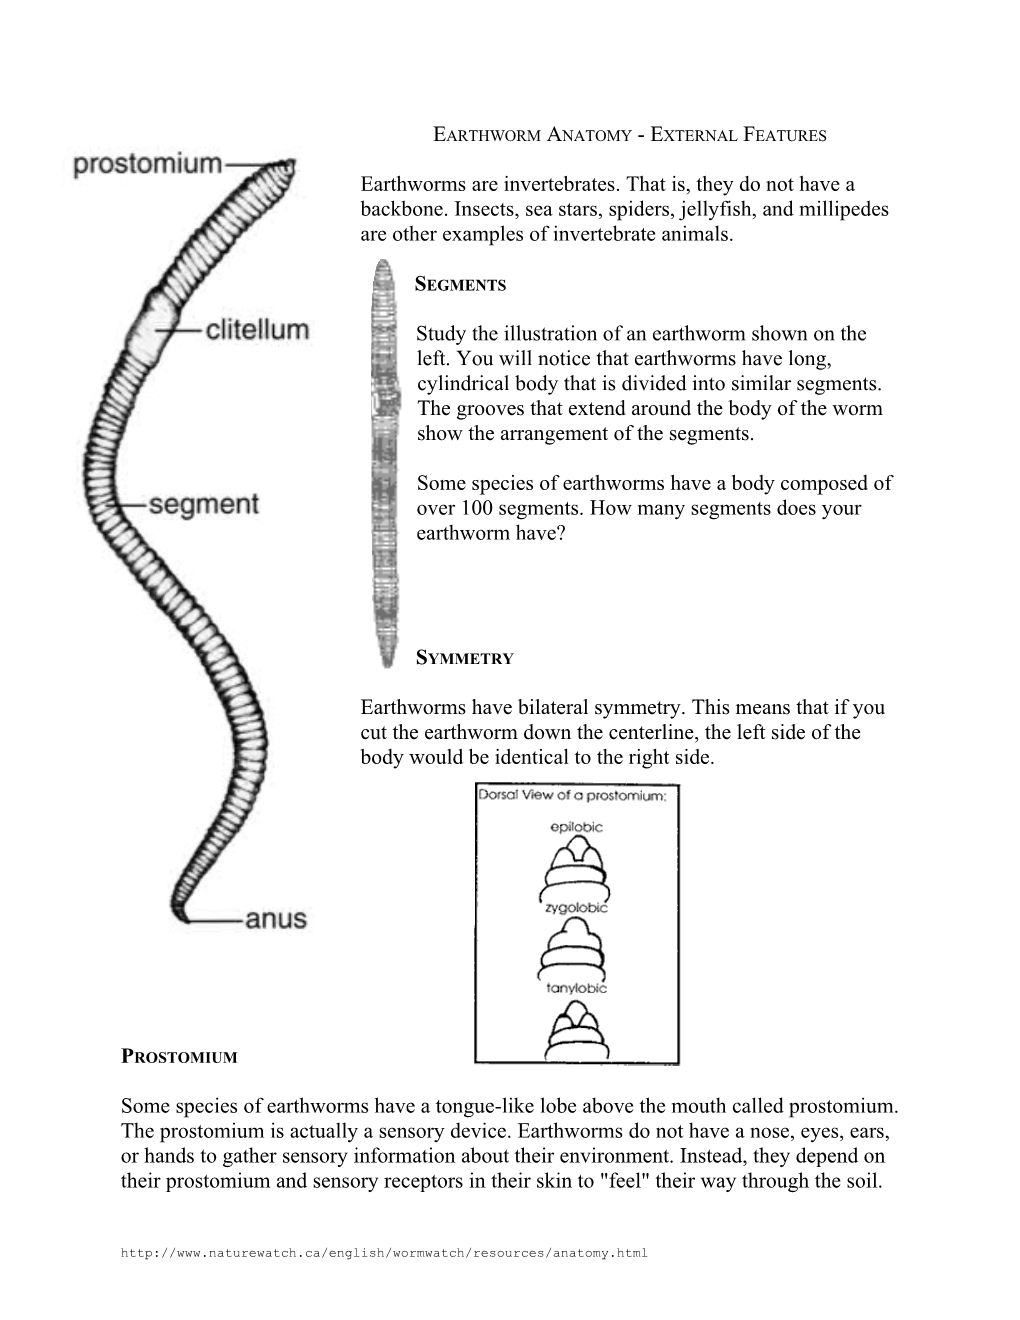 Earthworm Anatomy - External Features